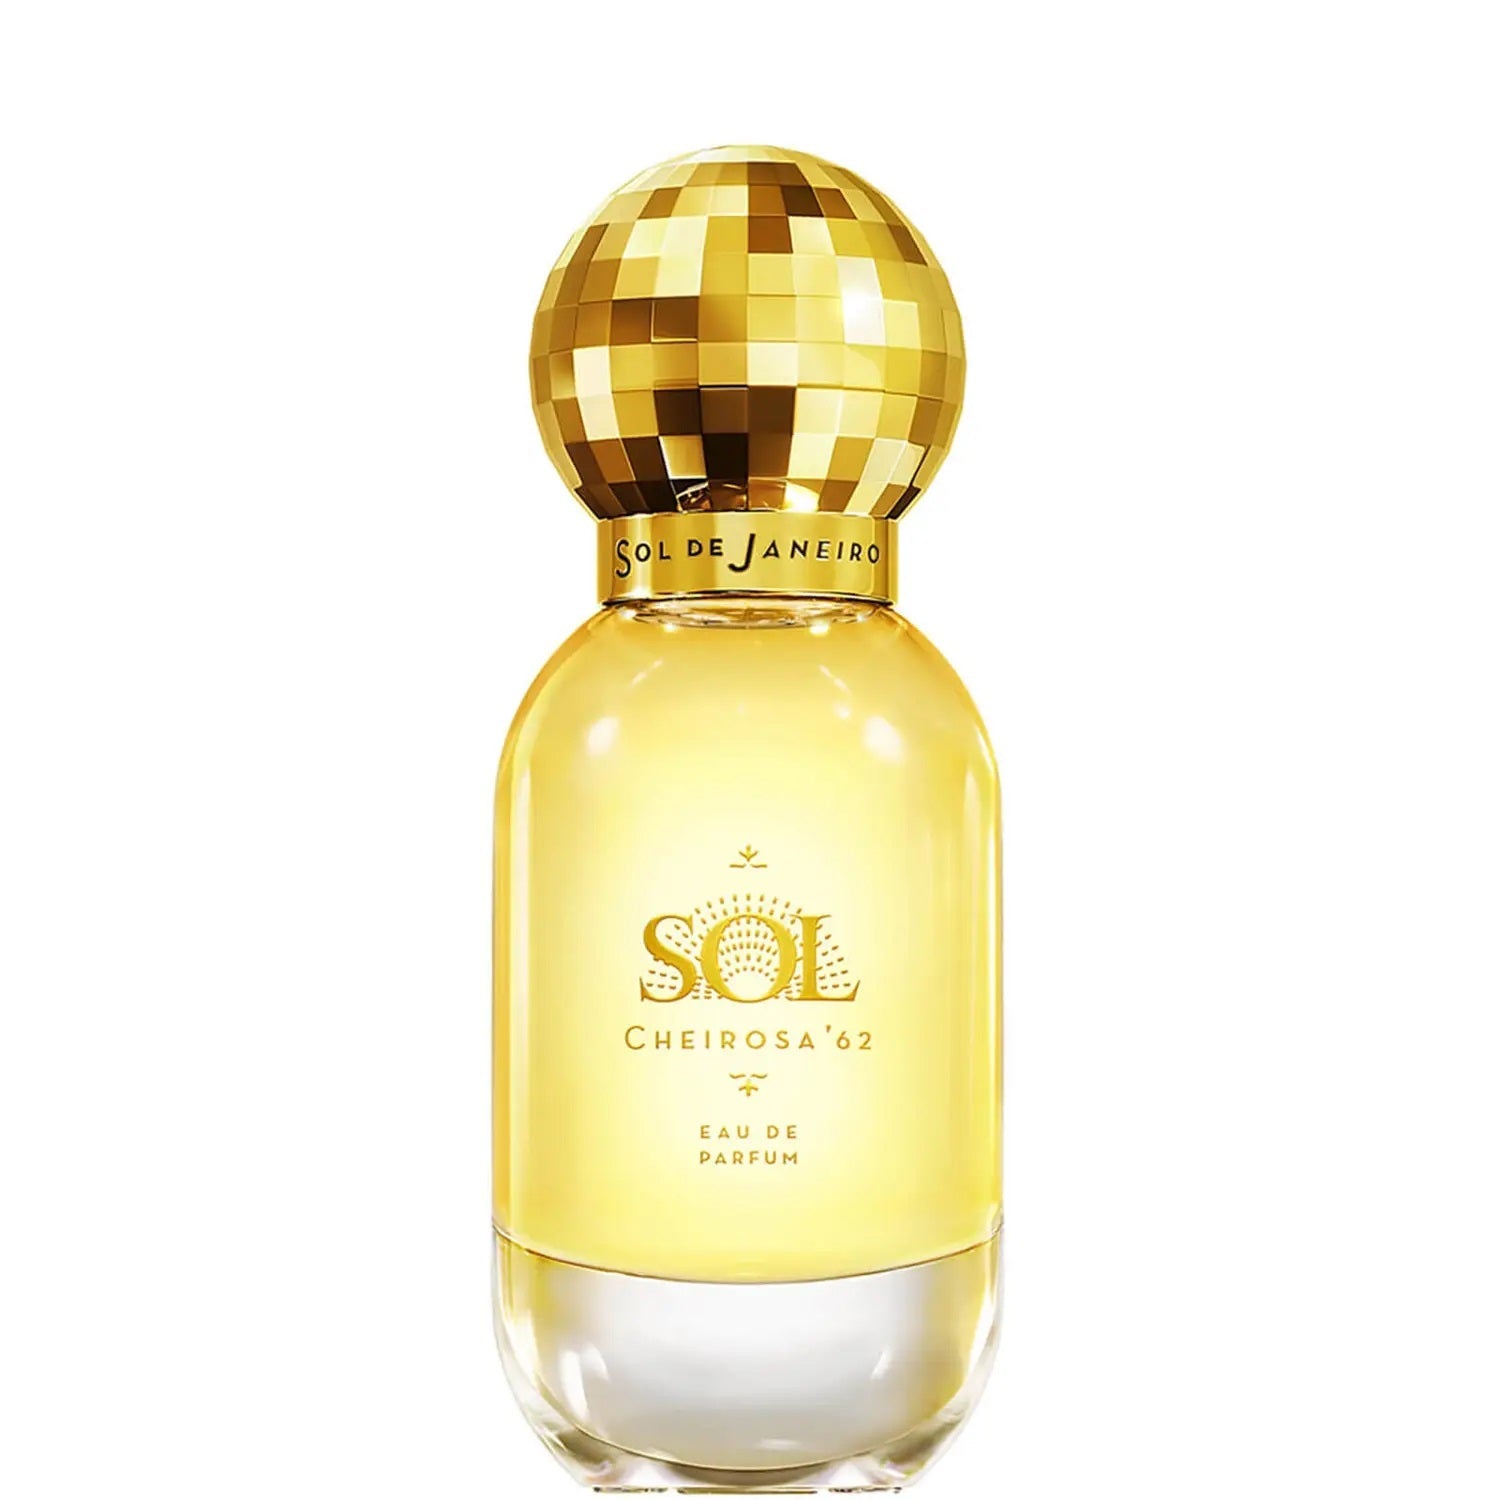 Sol de Janeiro Cheirosa ' 62 Eau de Parfum 50ml Grace Beauty